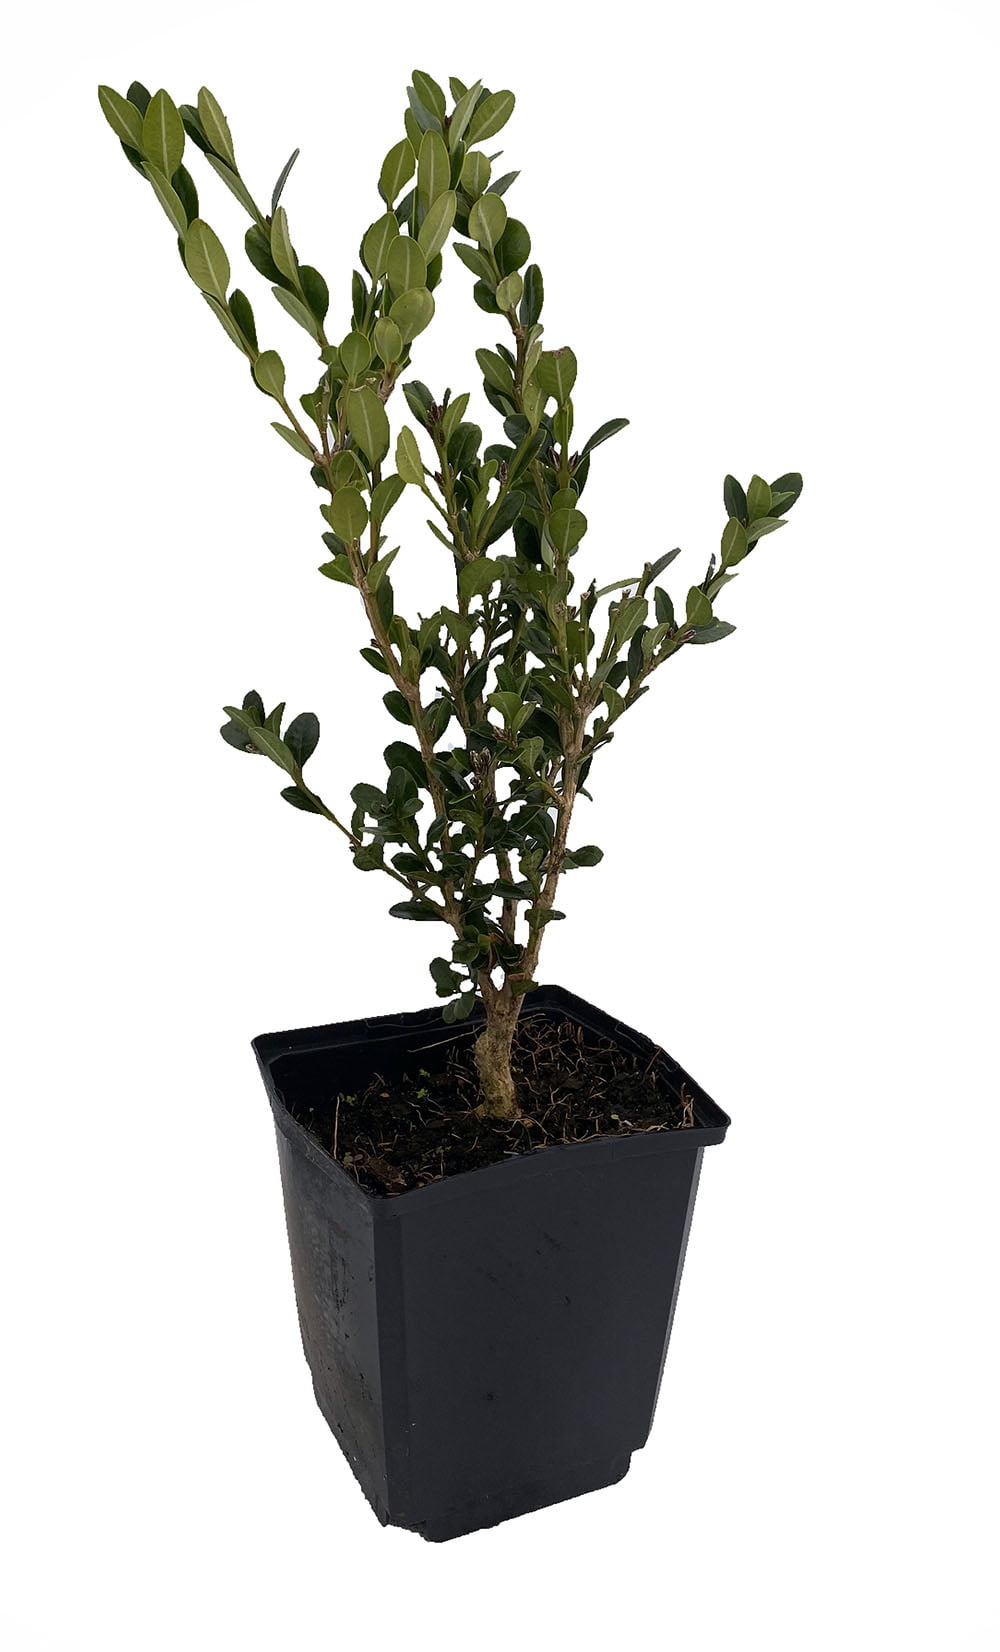 exc pot 55-65cm High 6L Pot Box Cone Buxus sempervirens